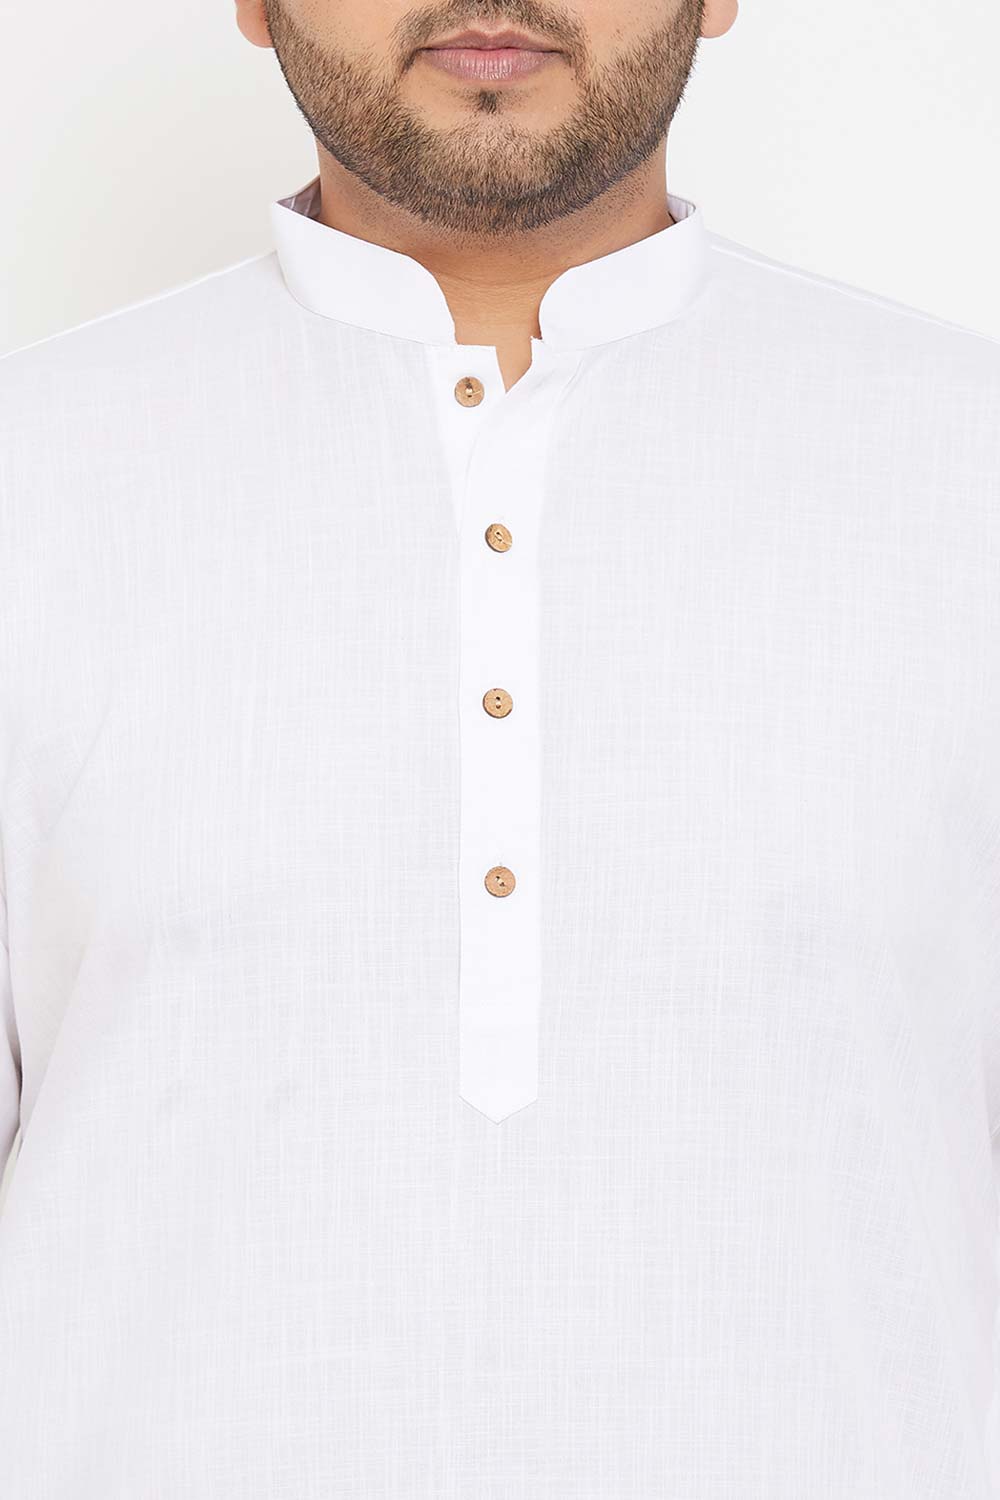 Buy Men's Cotton Blend Solid Kurta in White - Zoom in